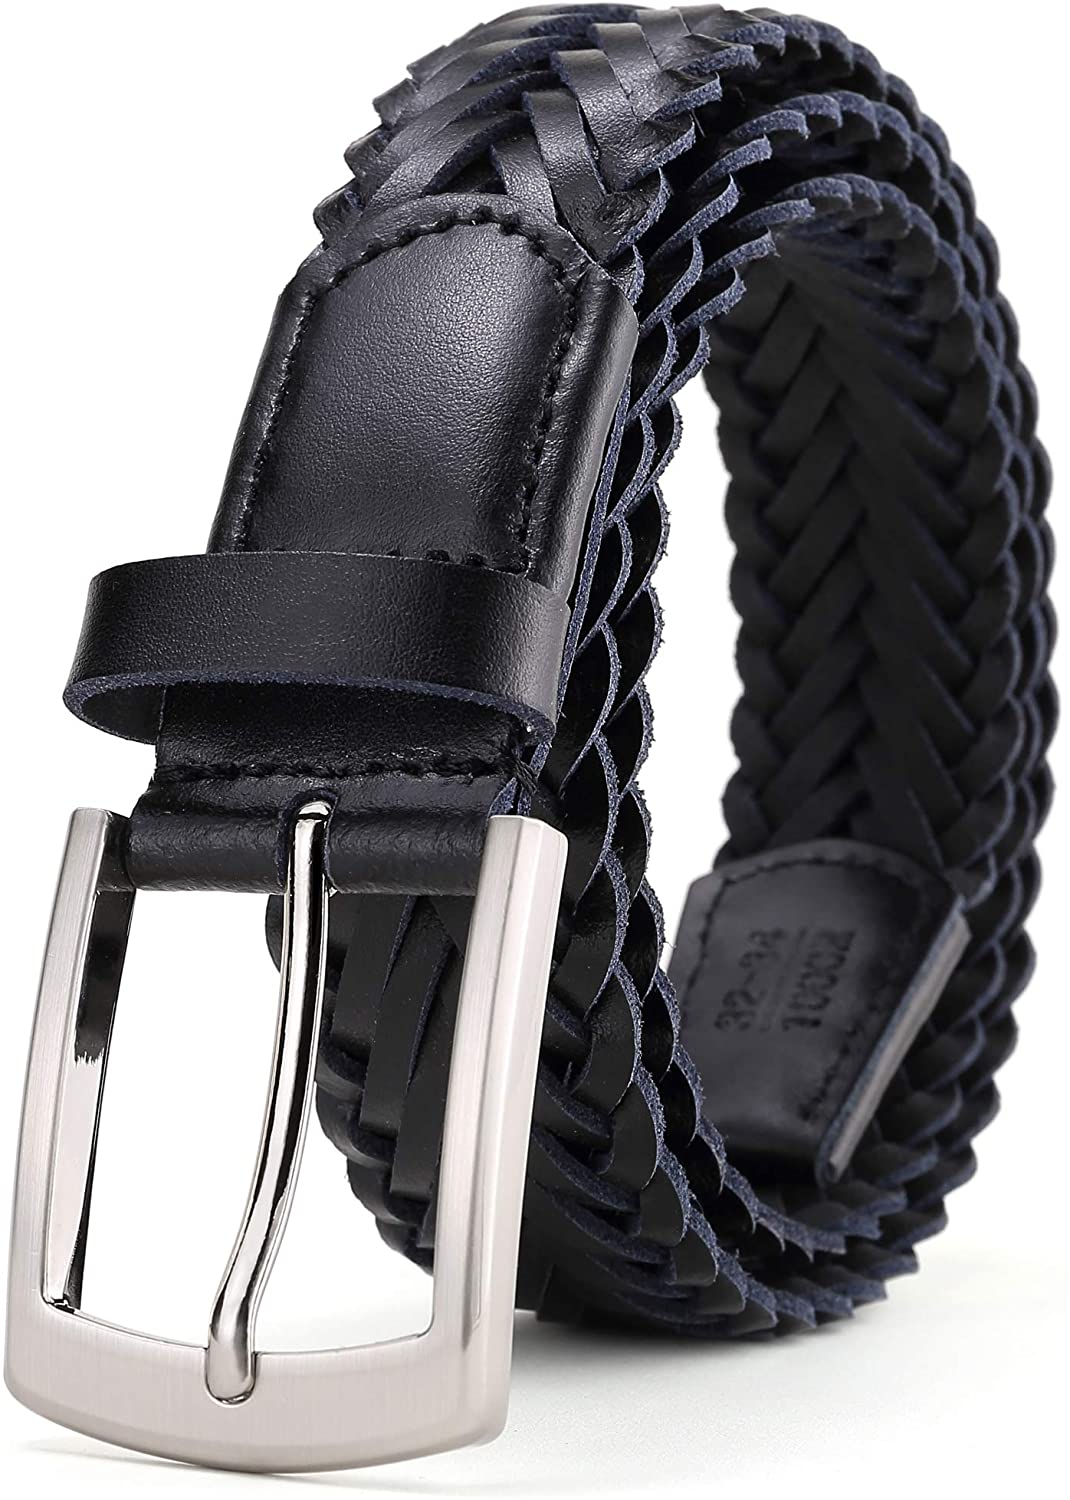 Weifert Men's Genuine Leather Braided Belt Leather Belt For Jeans ...